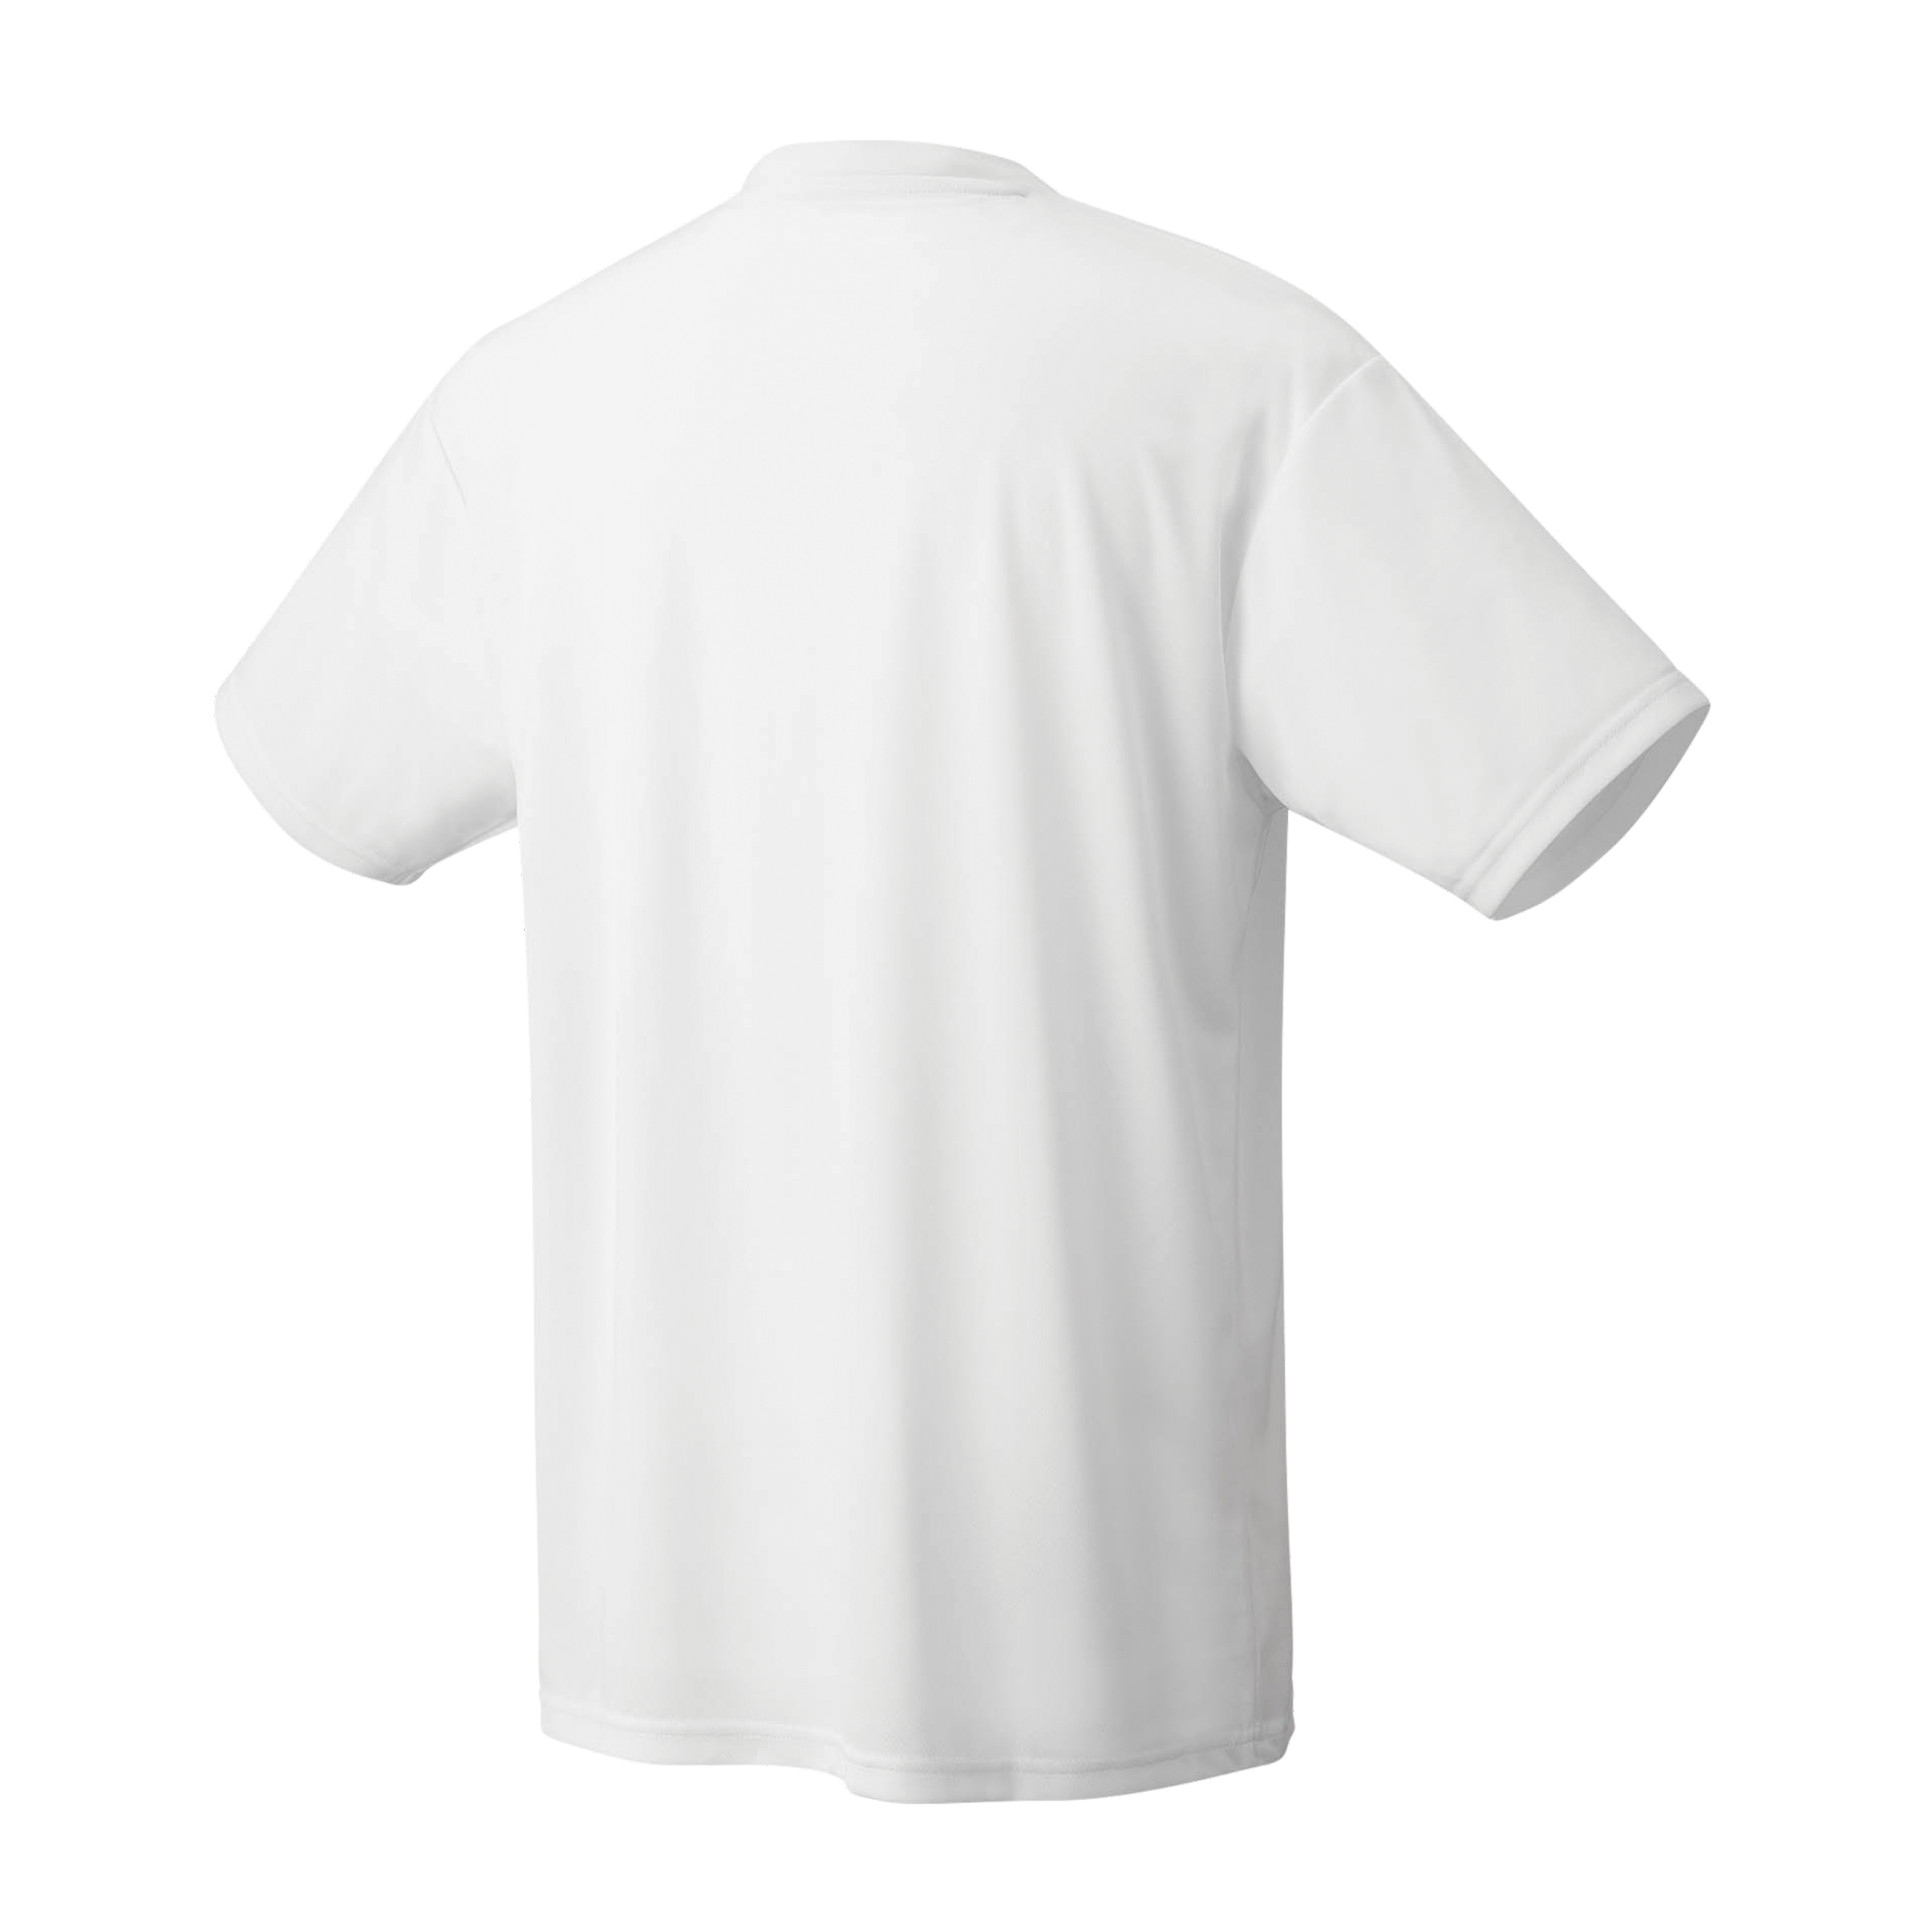 Yonex Fashion Sports Shirt YM0043 White UNISEX